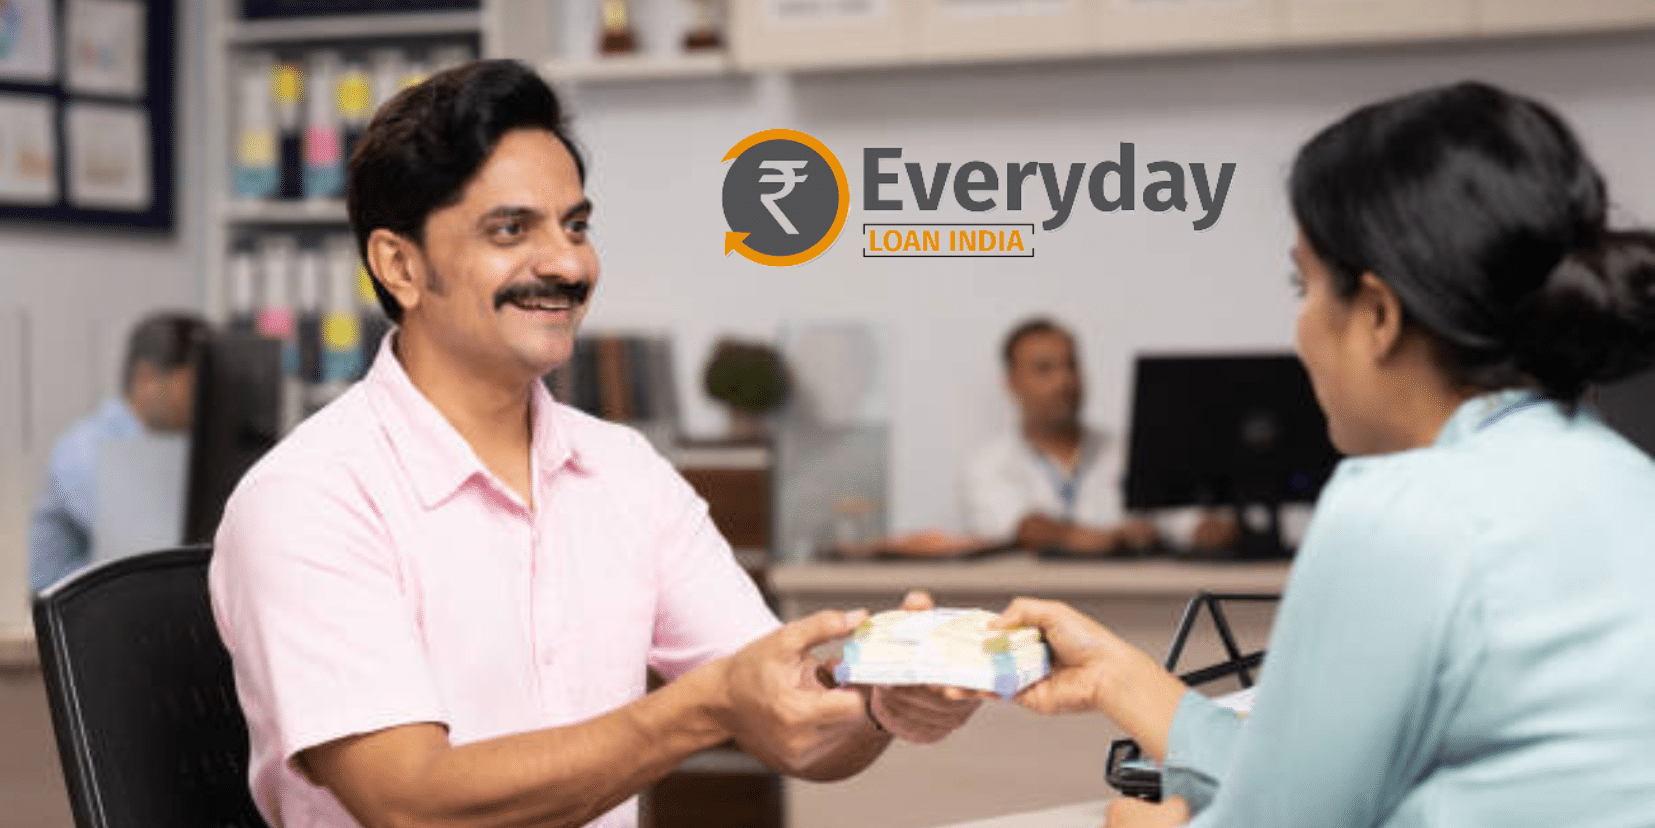 Everyday loan India